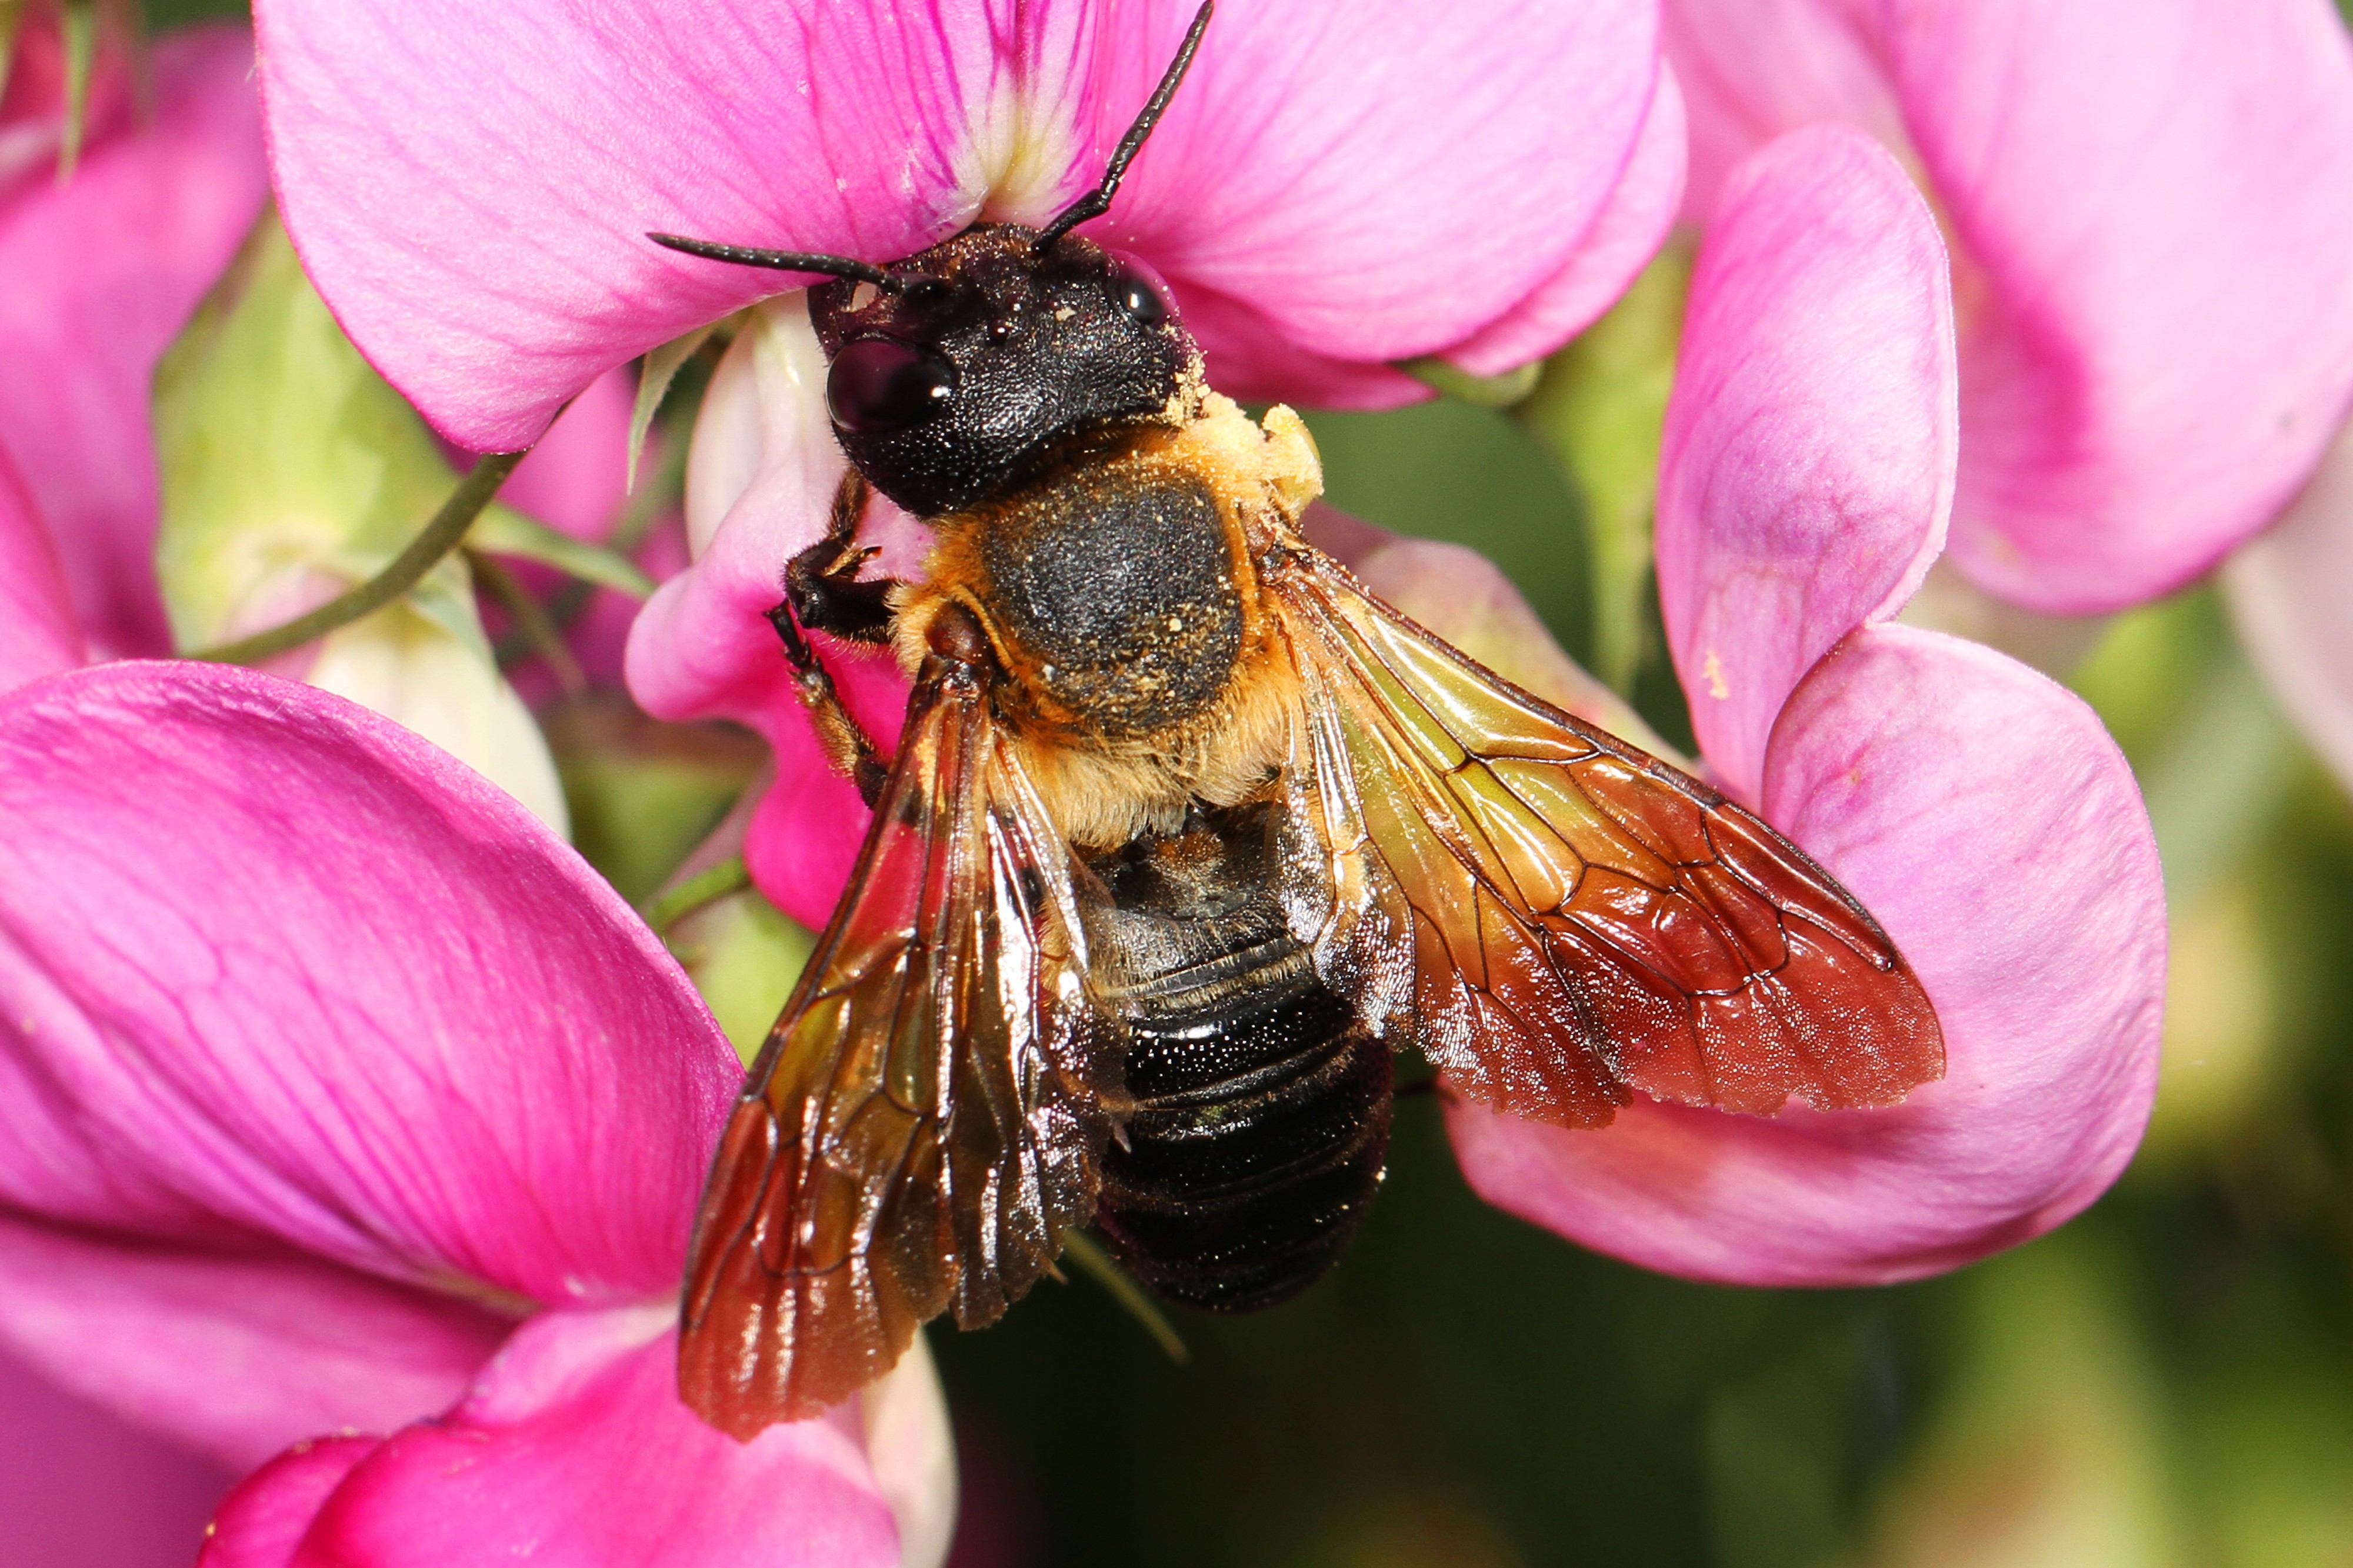 Giant Resin Bee - Megachile sculpturalis, Elkhorn Community Garden, Columbia, Maryland